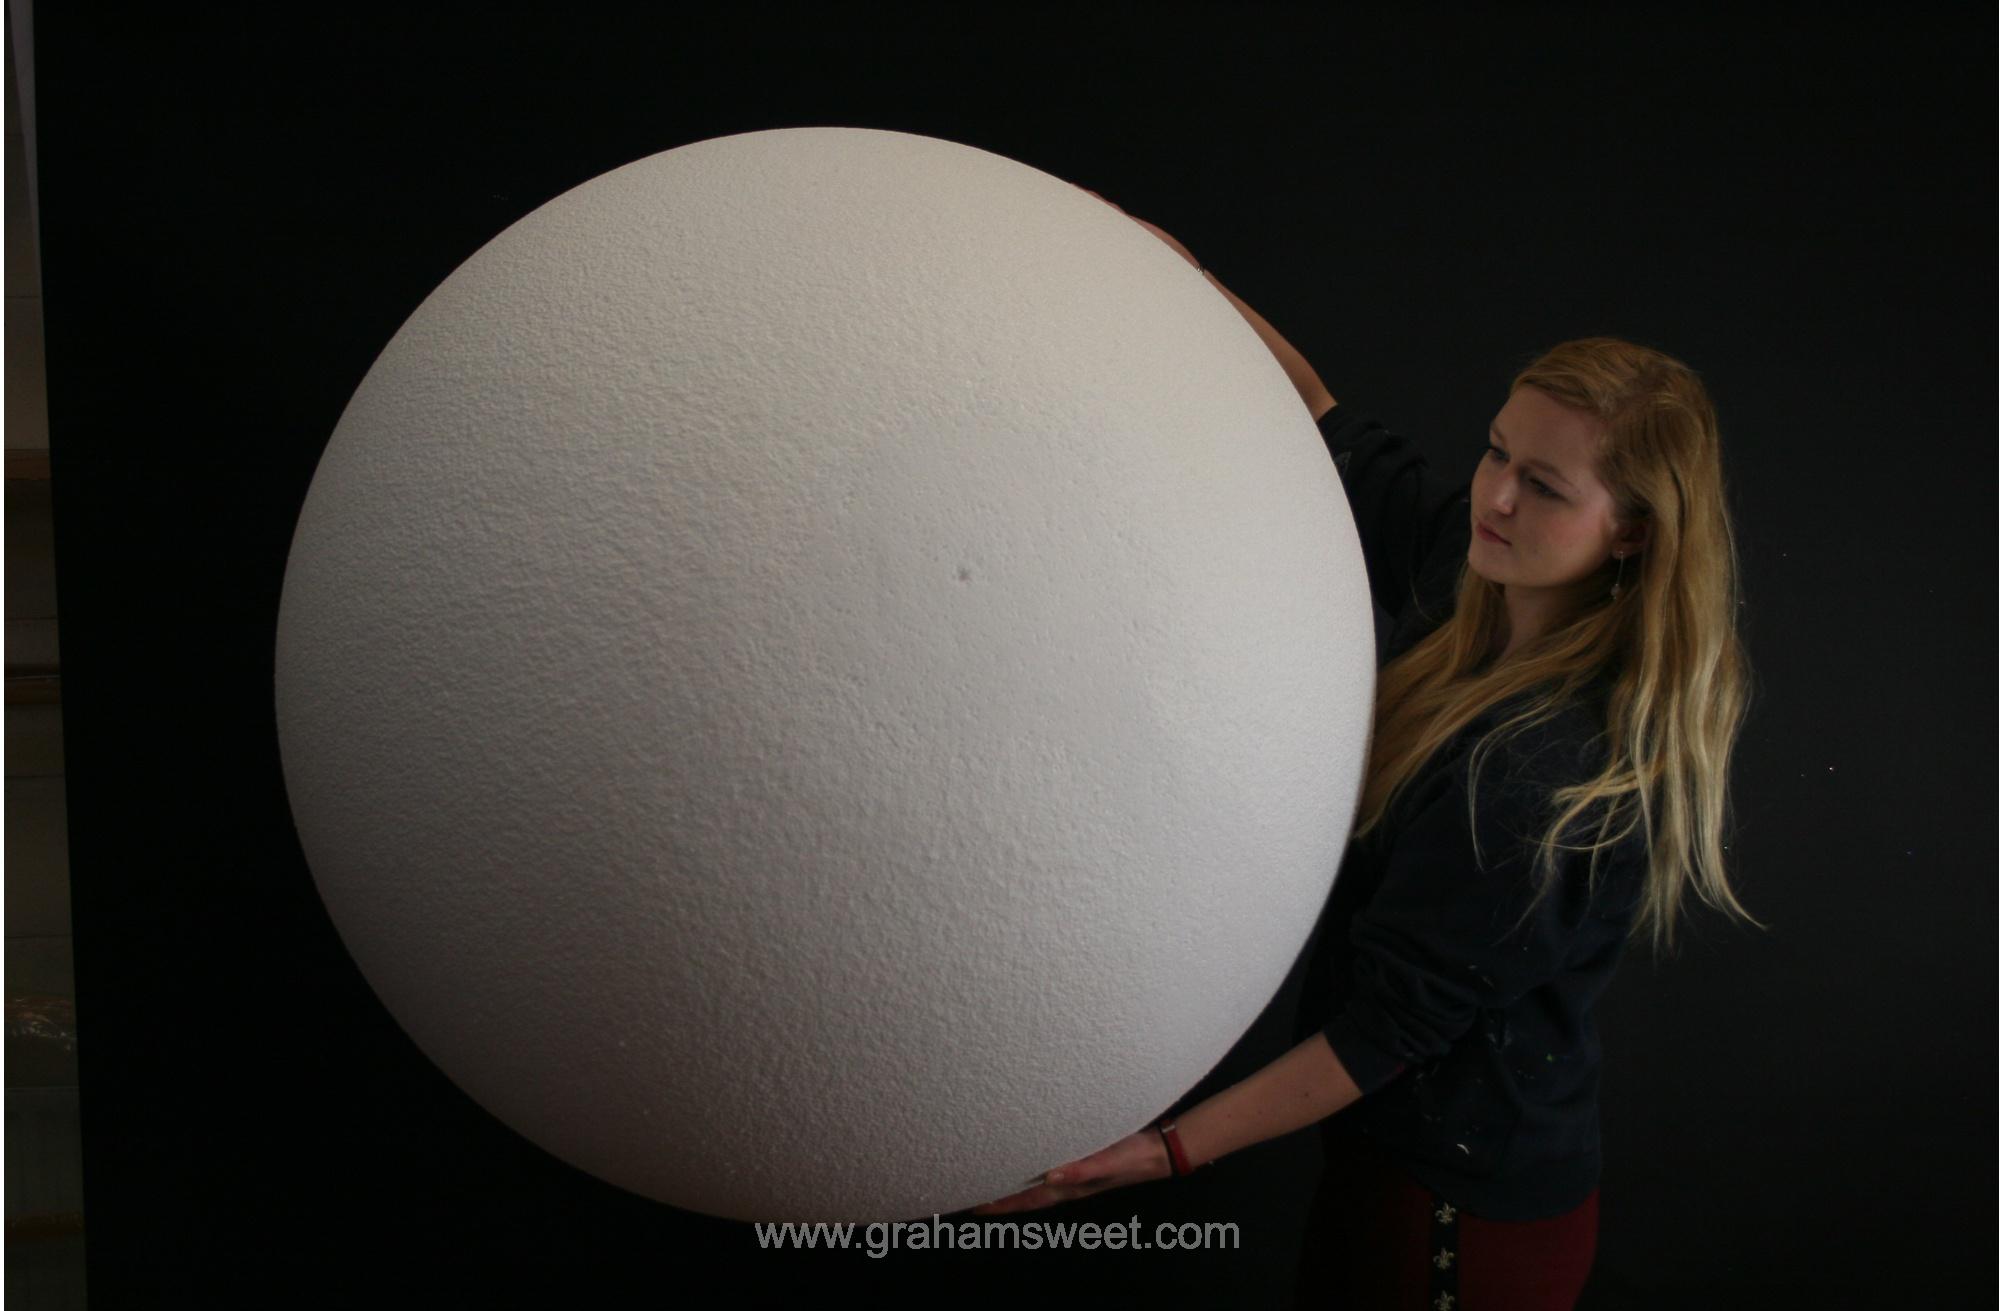 solid 1000mm polystyrene ball